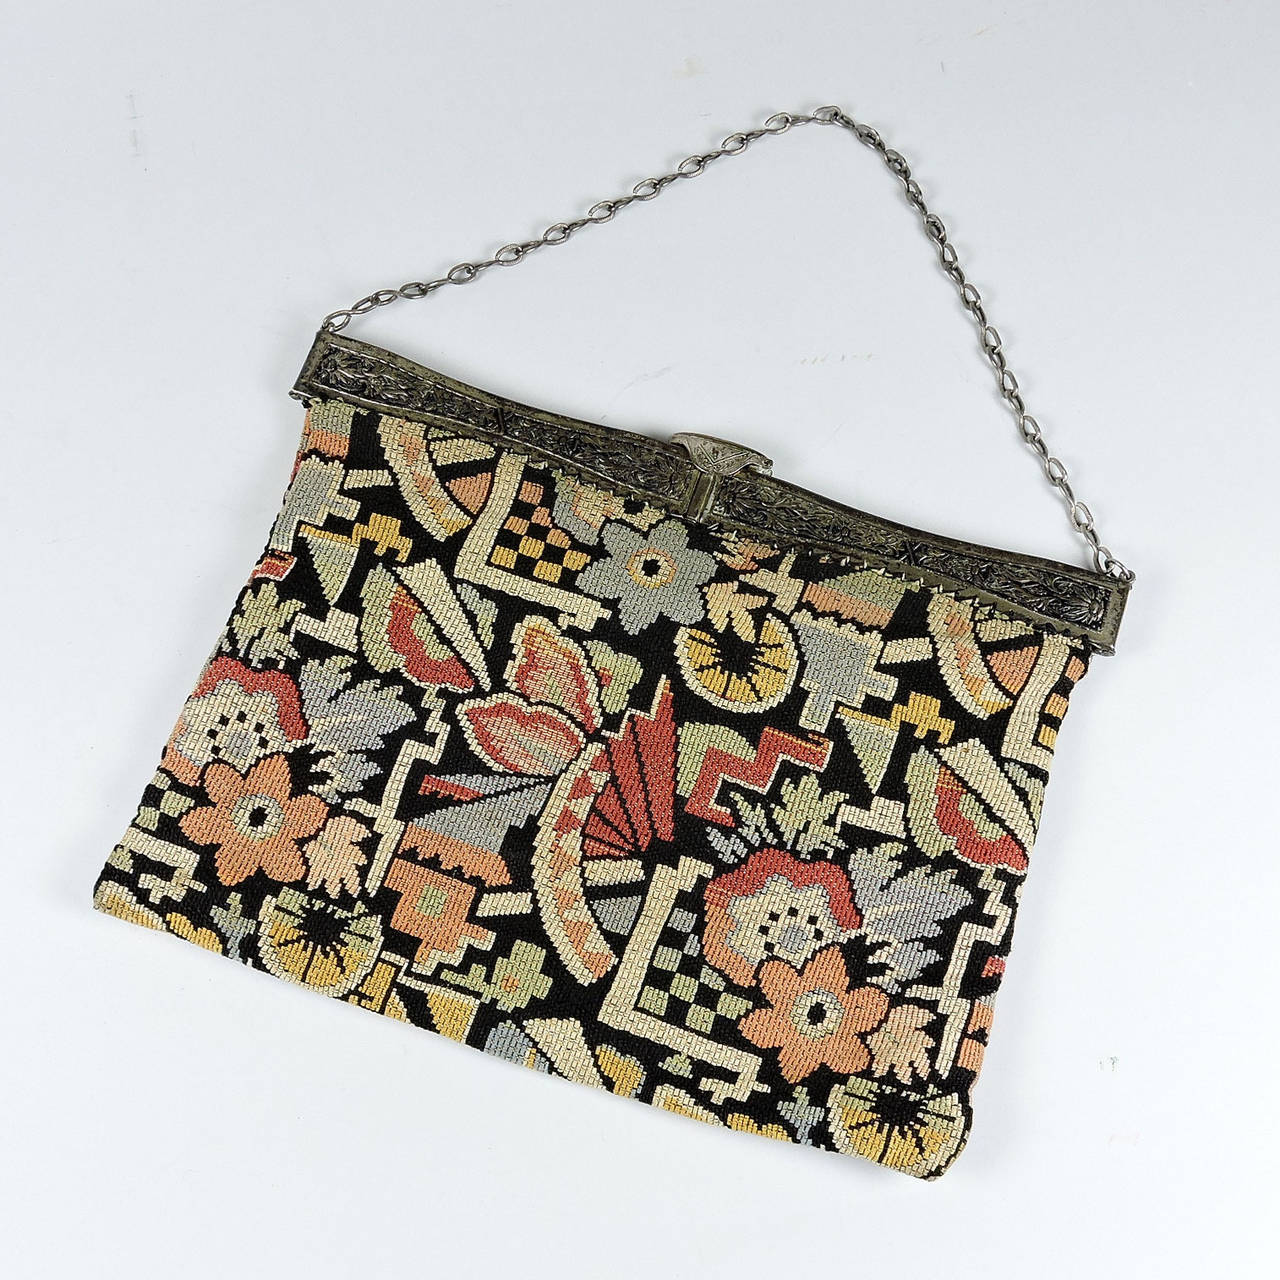 Art Deco Floral Design Needlework Handbag In Excellent Condition For Sale In Concord, MA